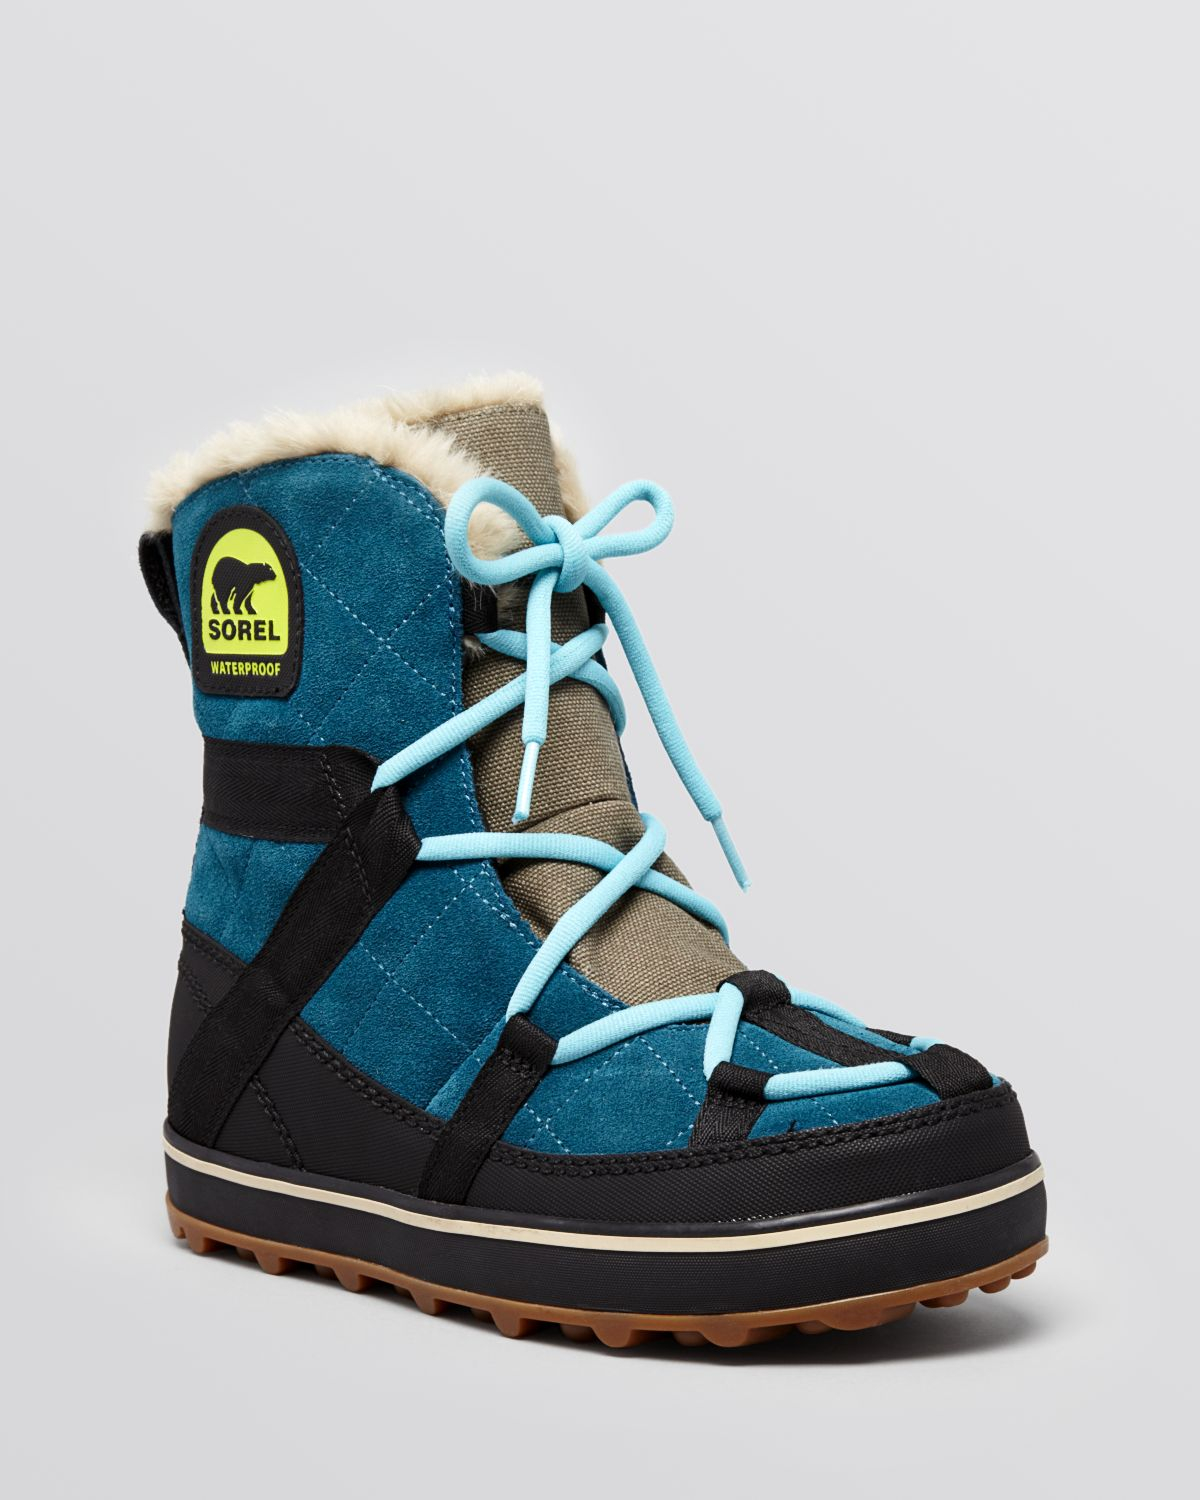 Sorel Waterproof Cold Weather Boots 